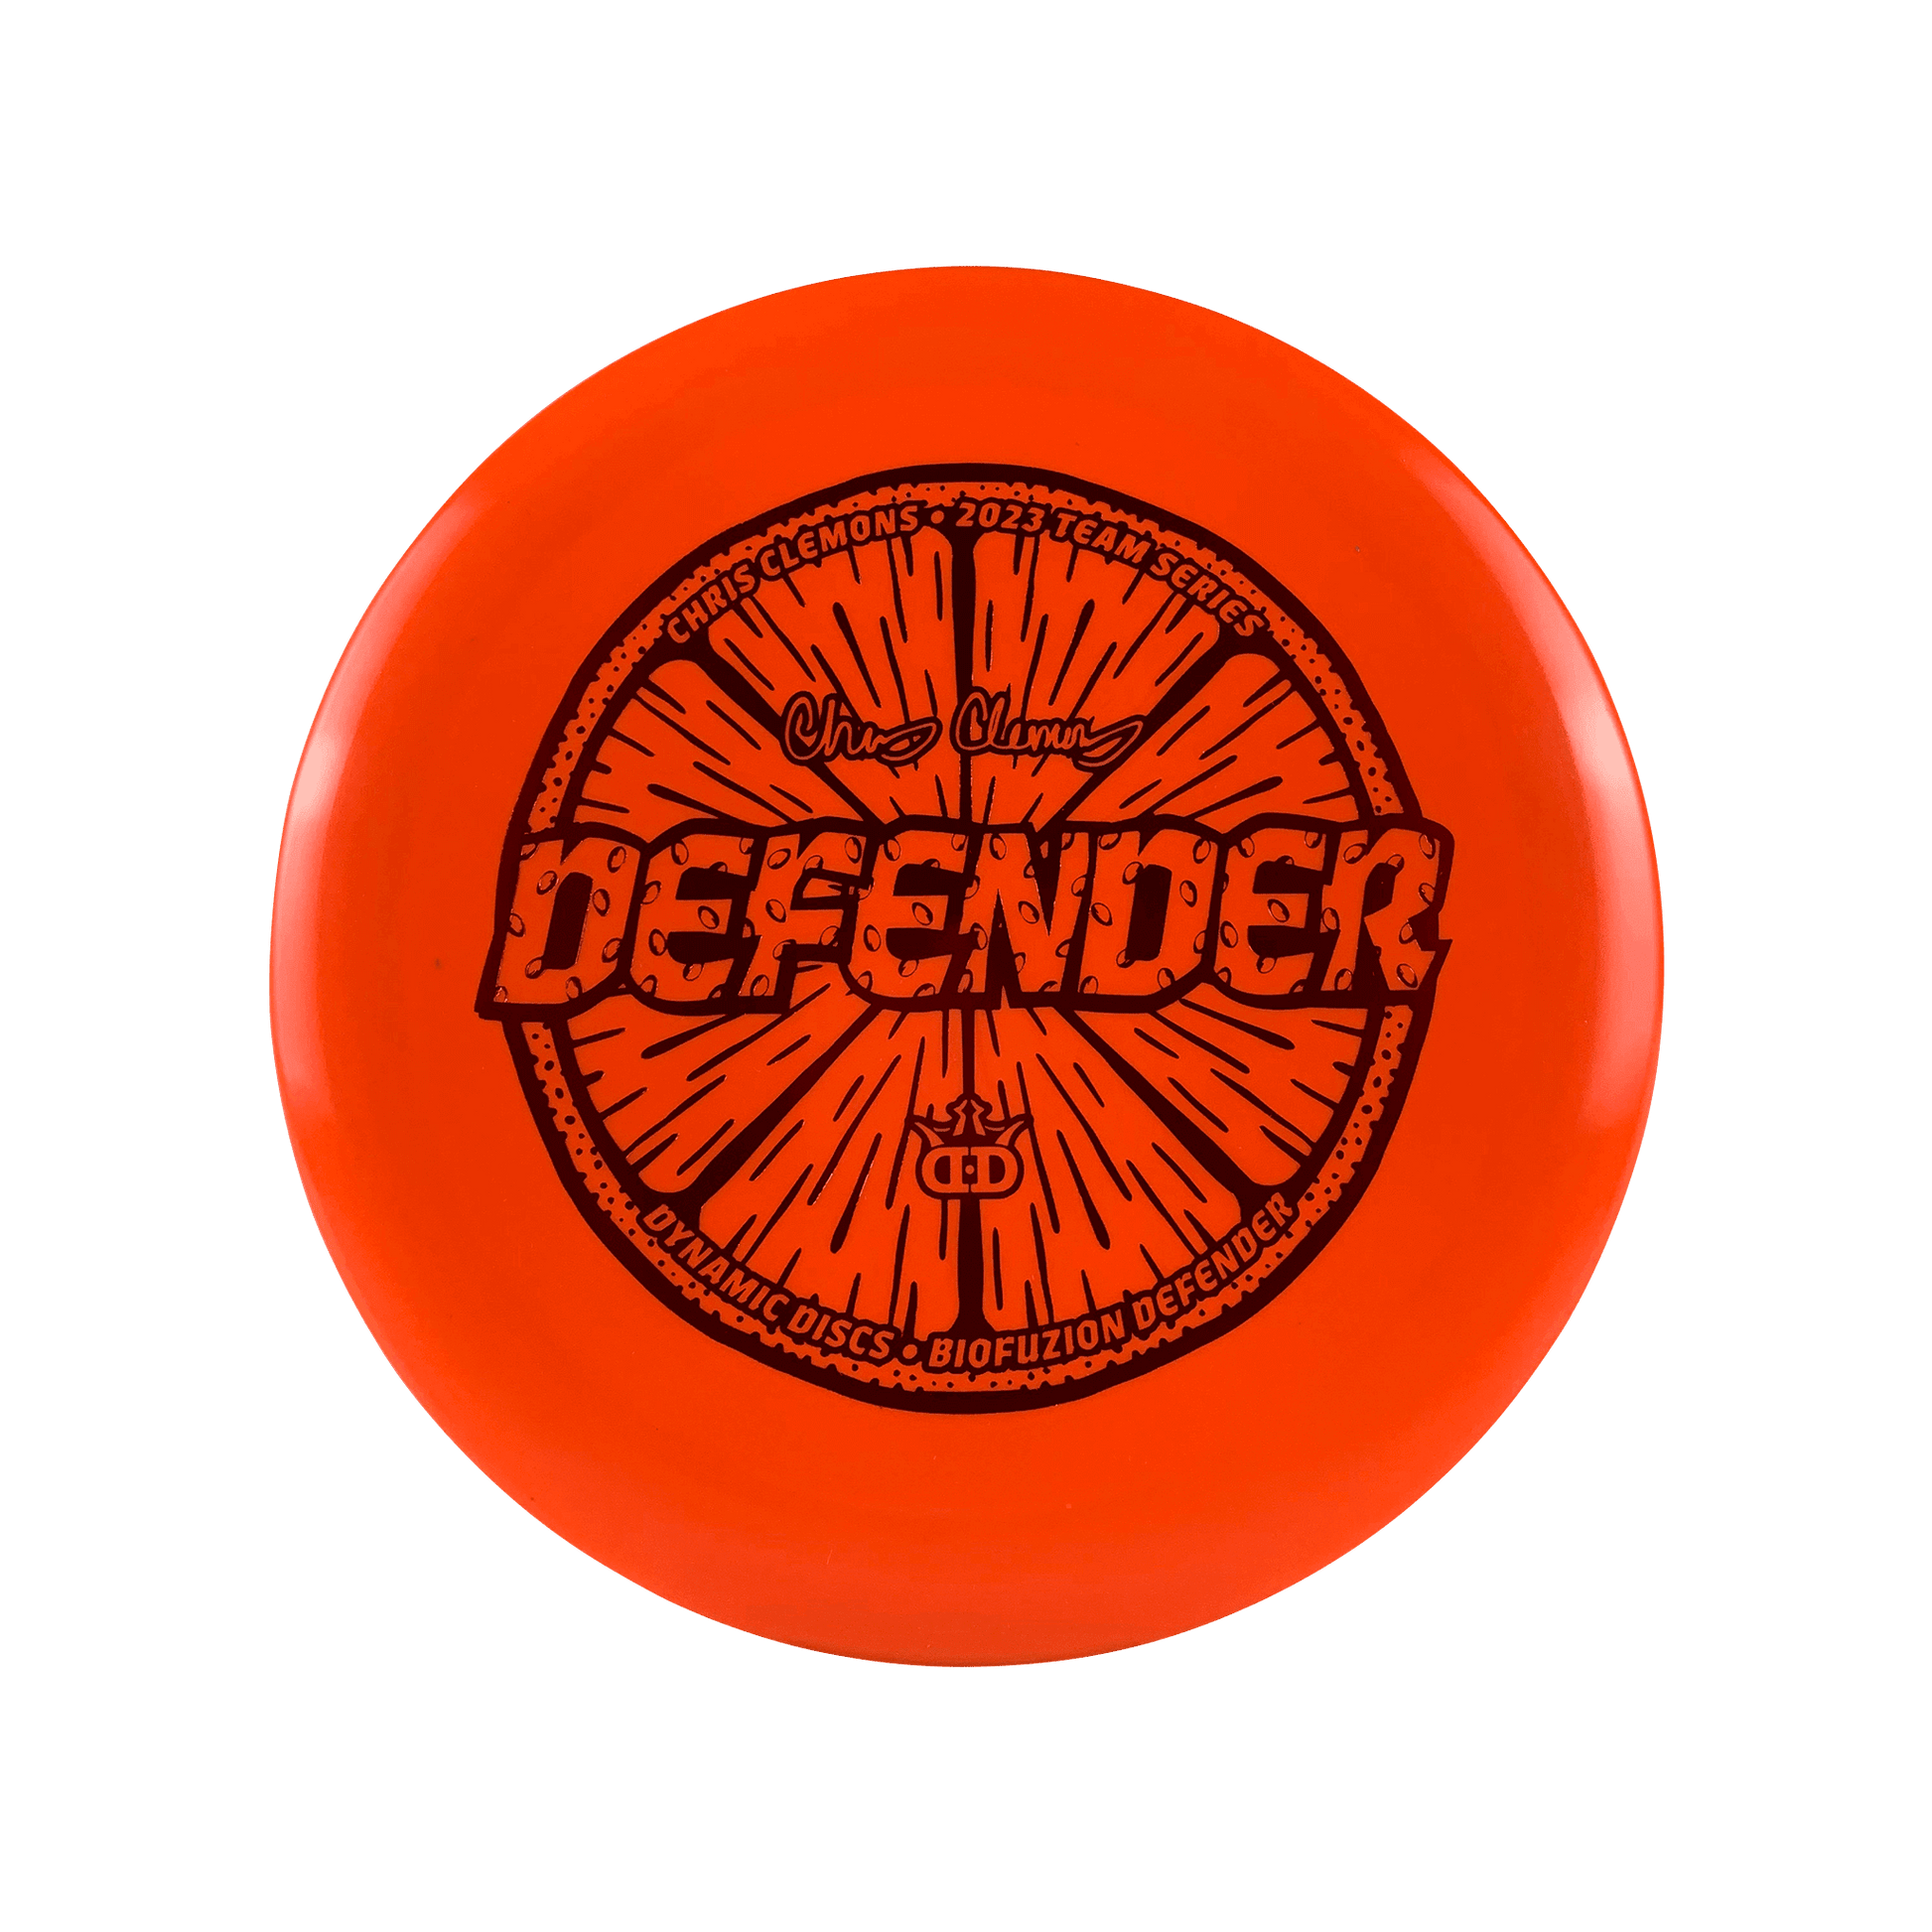 BioFuzion Defender - Chris Clemons Team Series Disc Dynamic Discs orange 174 